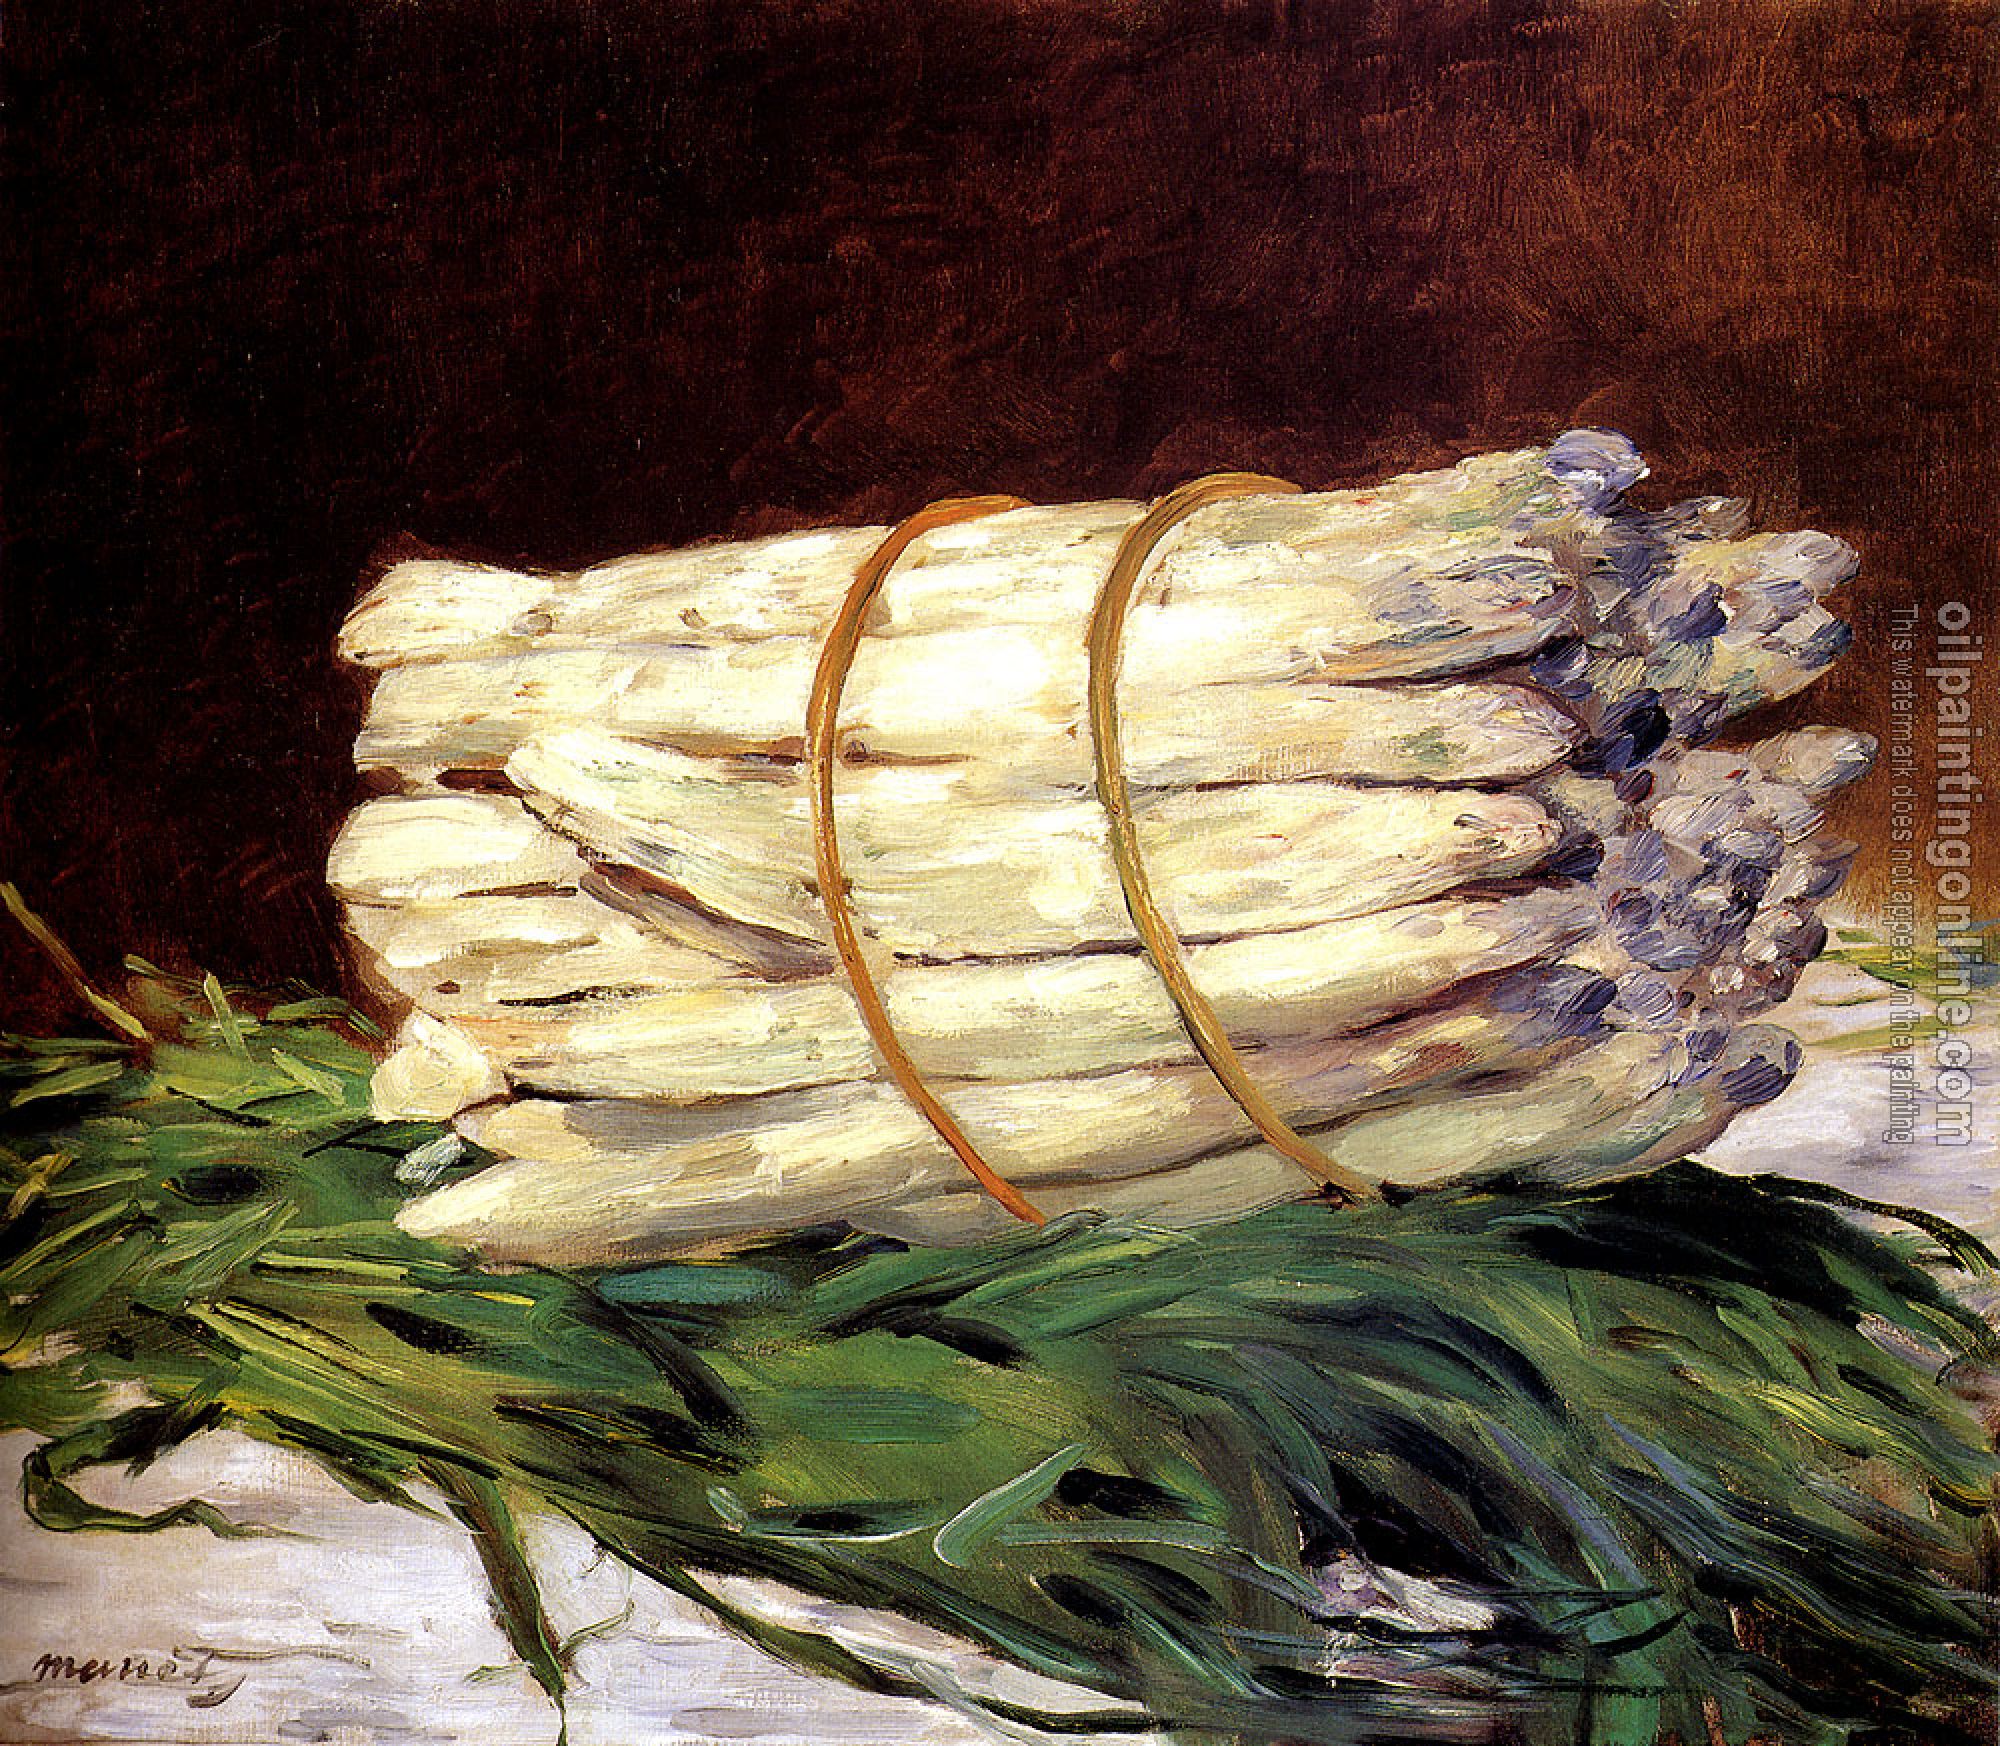 Manet, Edouard - A Bunch Of Asparagus